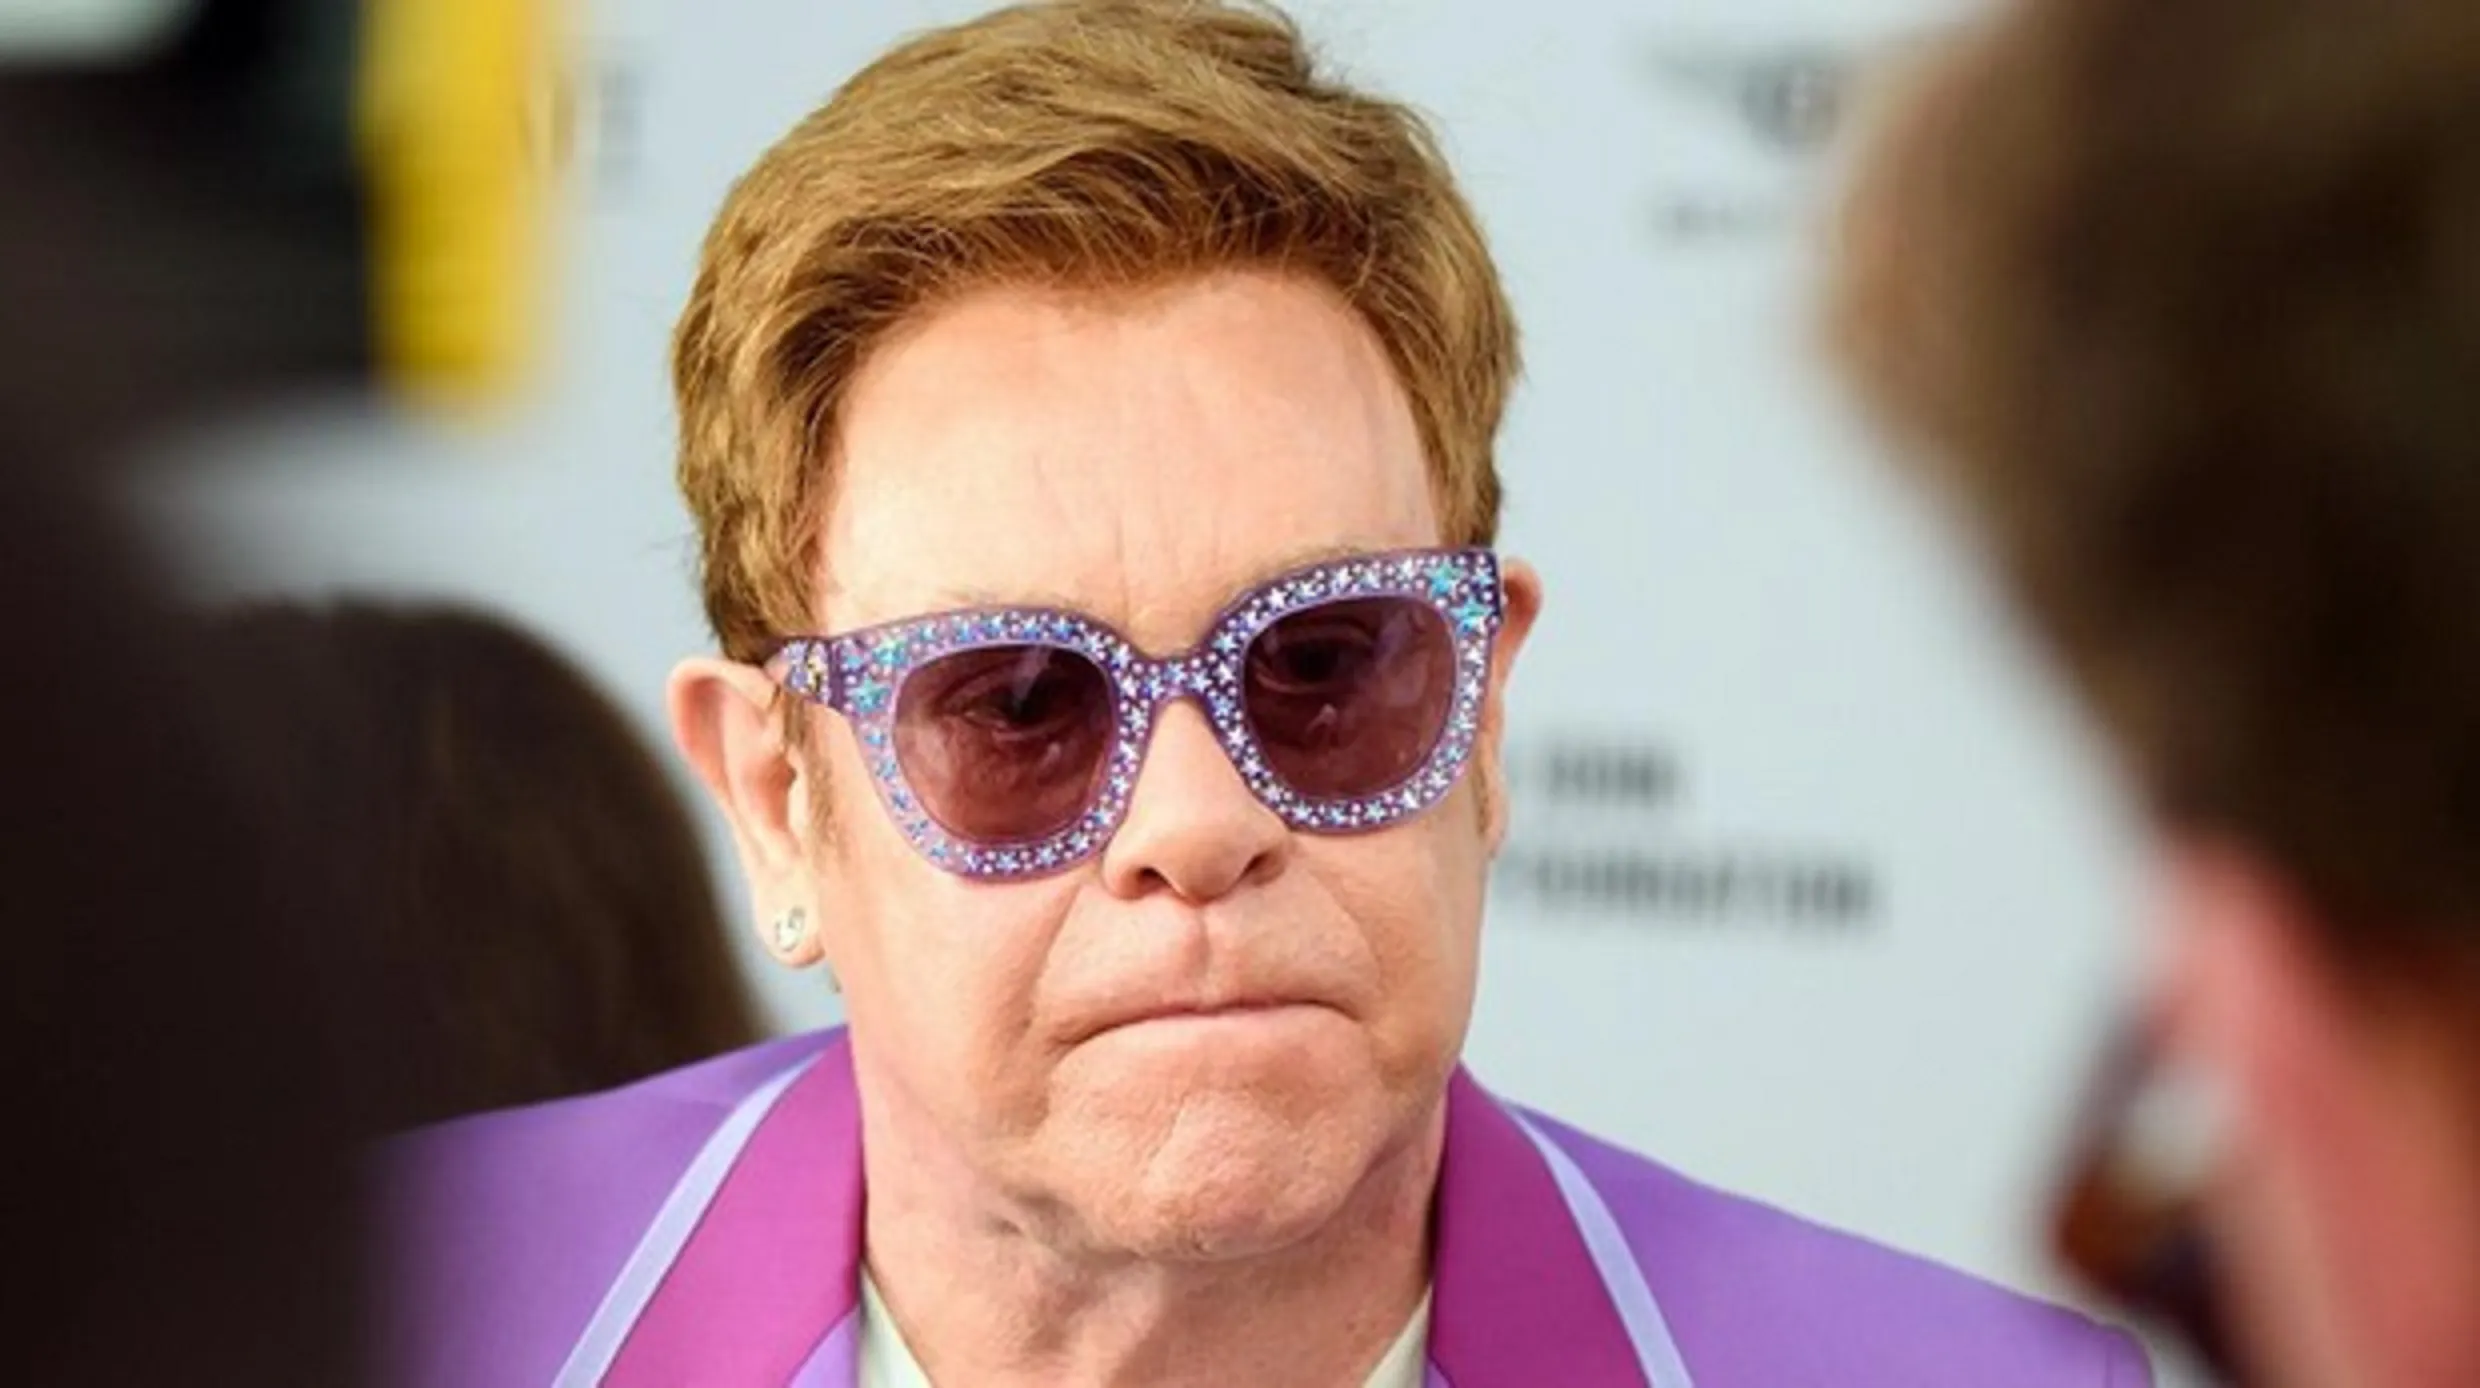 Internan de emergencia a Elton John tras accidente en su casa